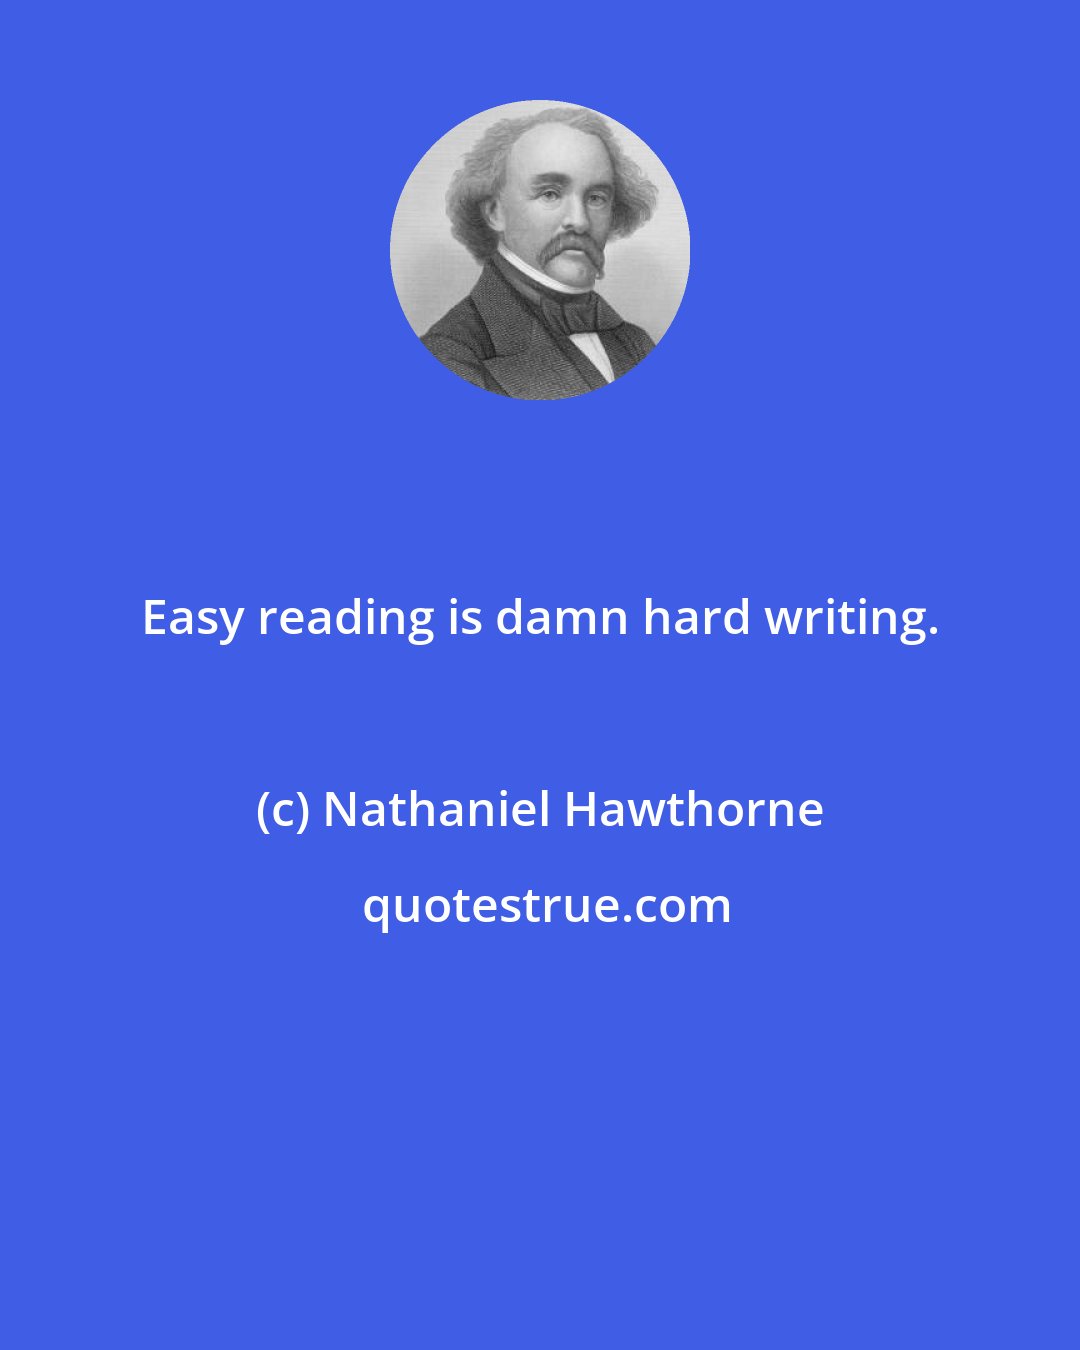 Nathaniel Hawthorne: Easy reading is damn hard writing.